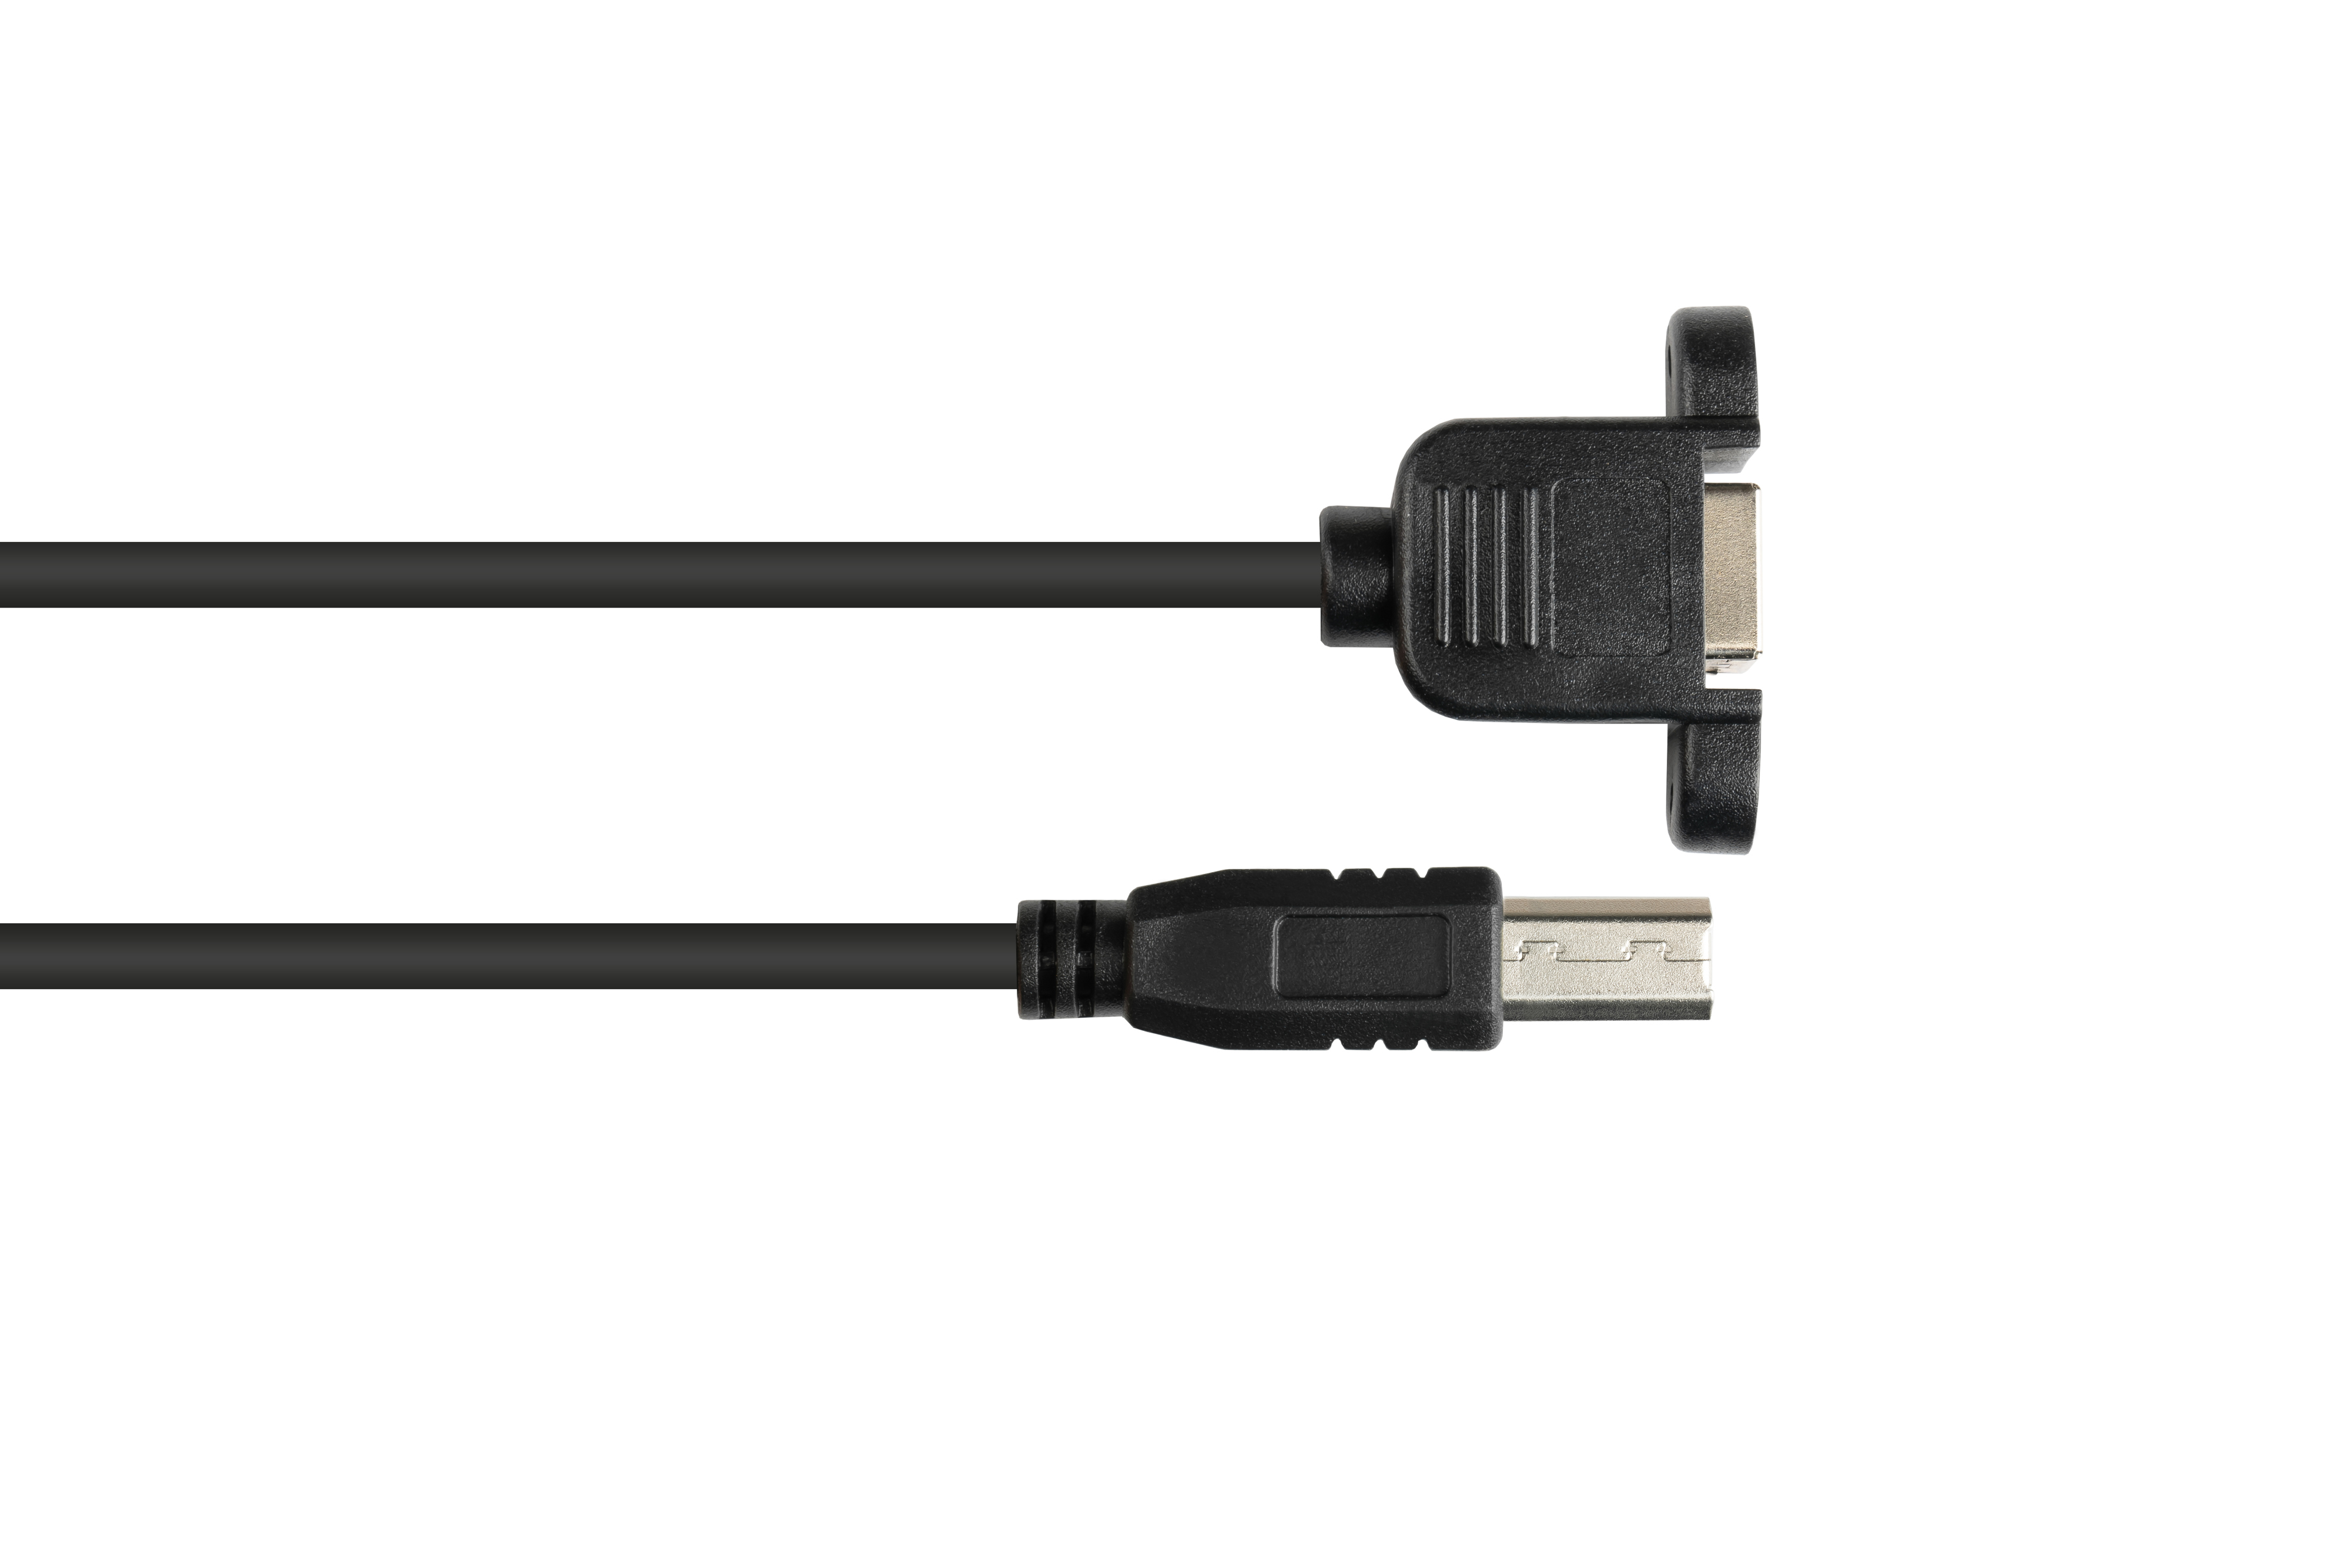 USB GOOD CU, B, Verlängerungskabel Stecker an B 2.0 CONNECTIONS Einbaubuchse schwarz